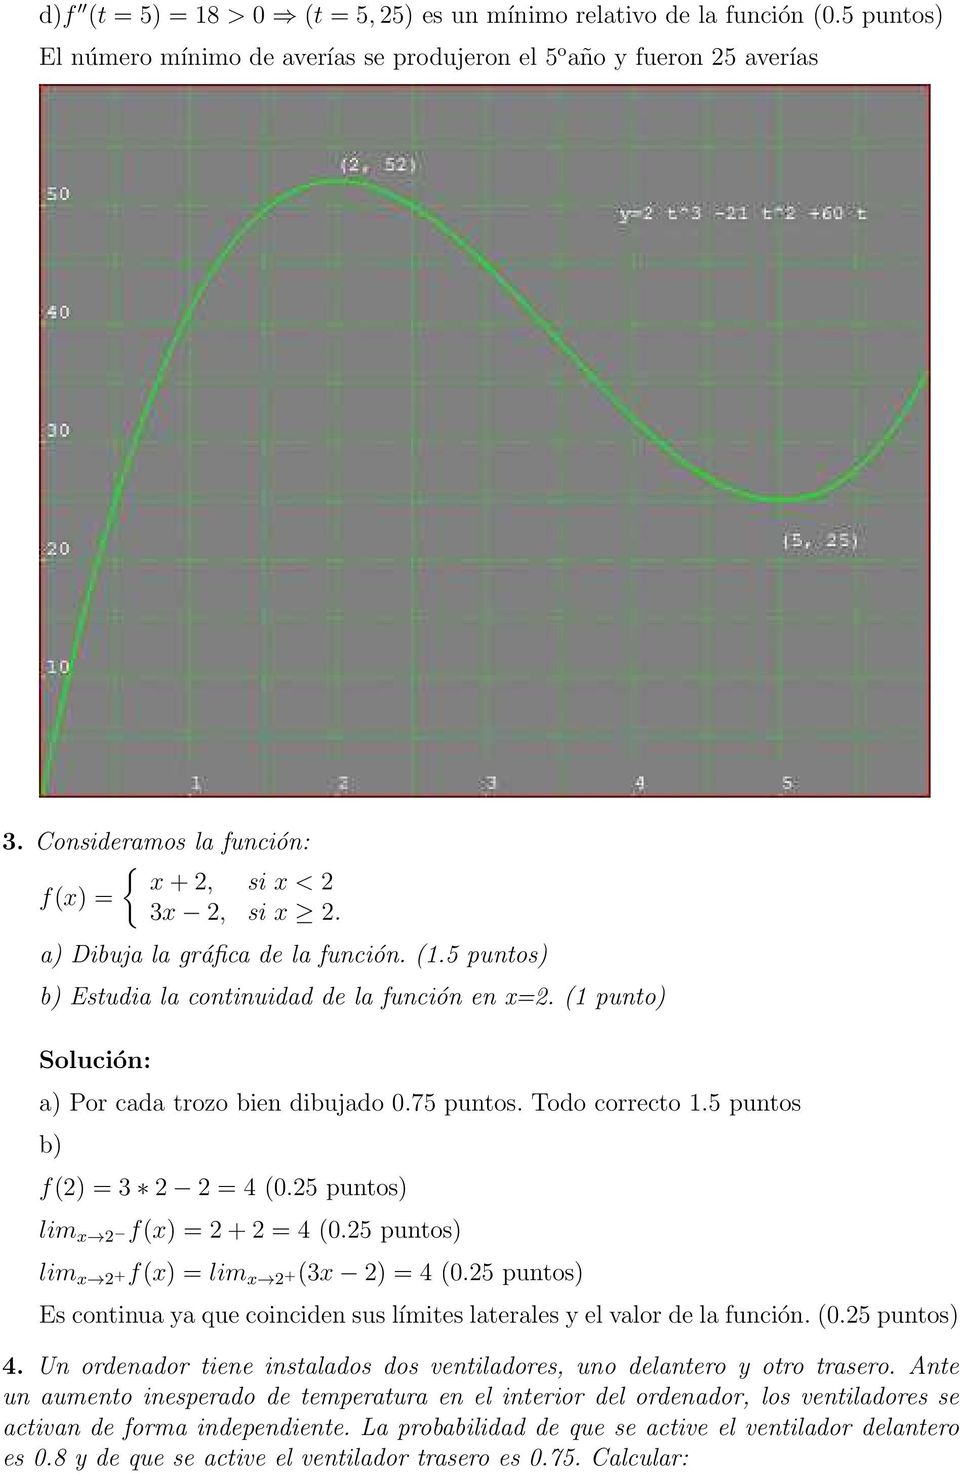 (1 punto) a) Por cada trozo bien dibujado 0.75 puntos. Todo correcto 1.5 puntos b) f(2) = 3 2 2 = 4 (0.25 puntos) lim x 2 f(x) = 2 + 2 = 4 (0.25 puntos) lim x 2 +f(x) = lim x 2 +(3x 2) = 4 (0.